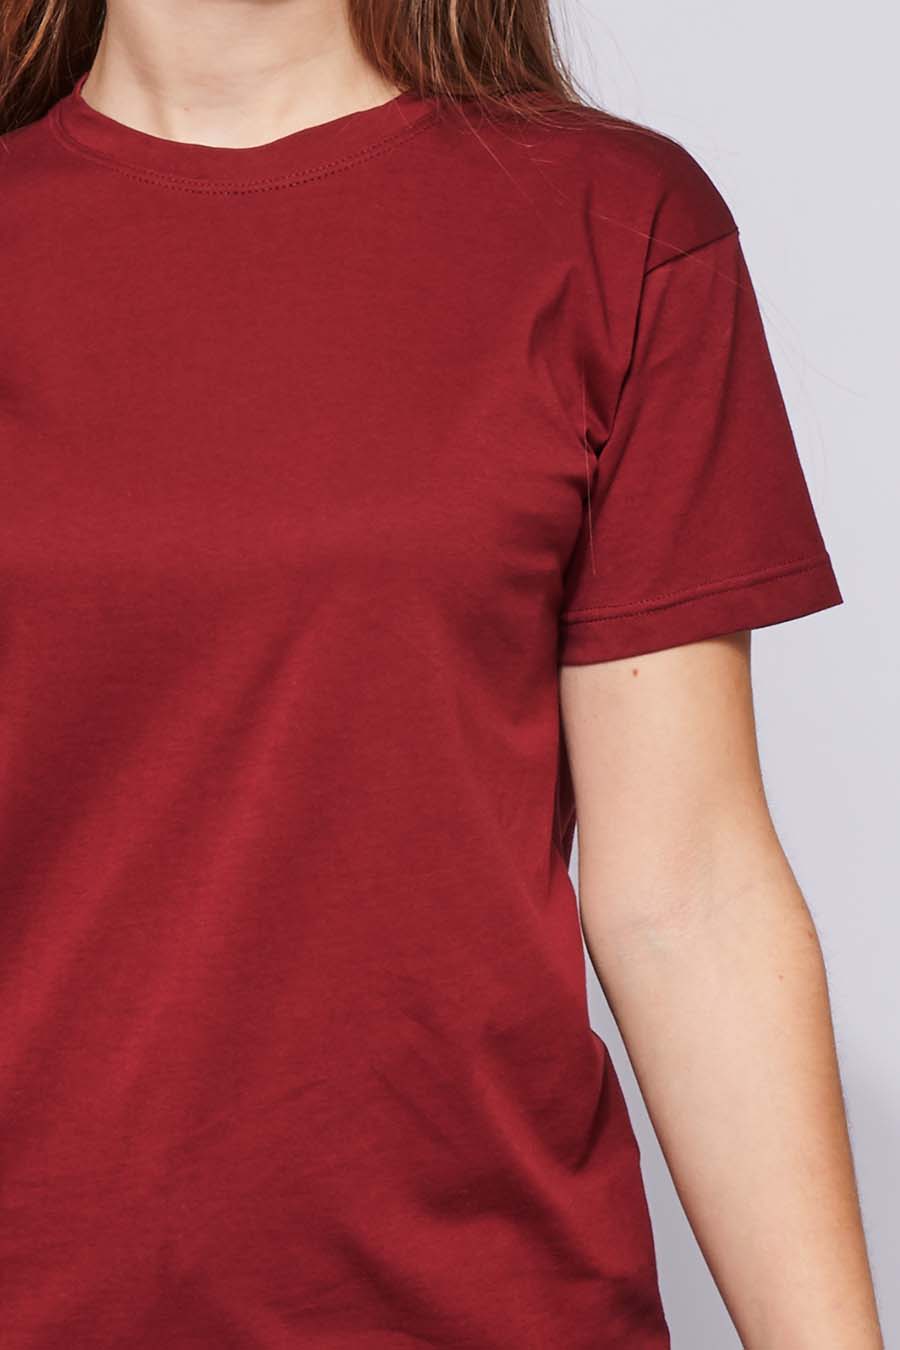 zoom tee-shirt Femme made in France en coton bio BRIGITTE bordeaux - FIL ROUGE